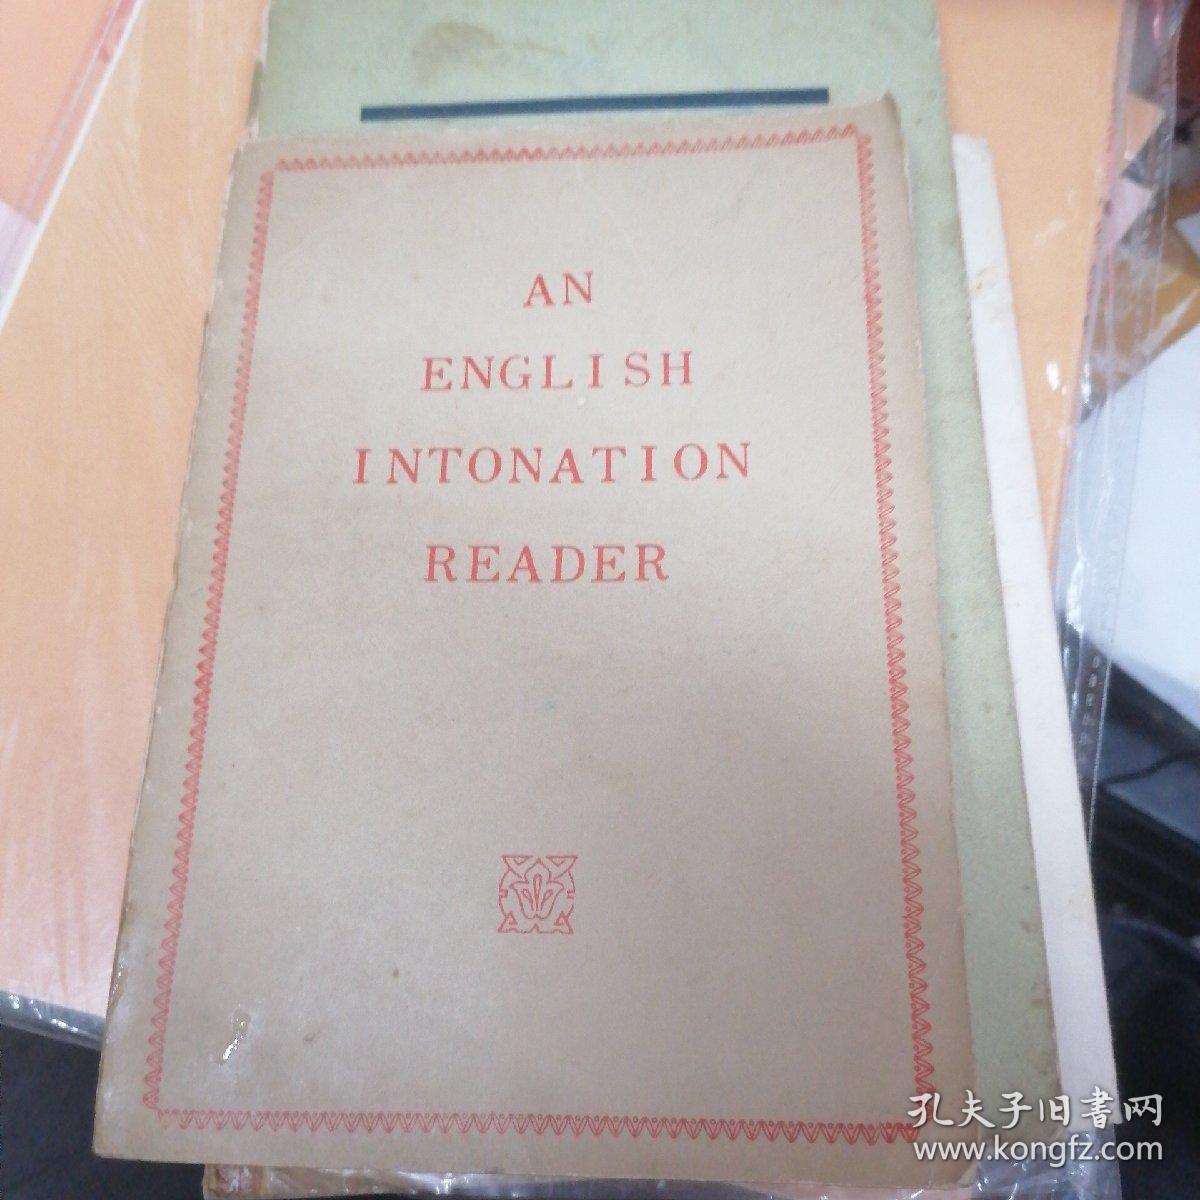 AN ENGLISH INTNATION READER